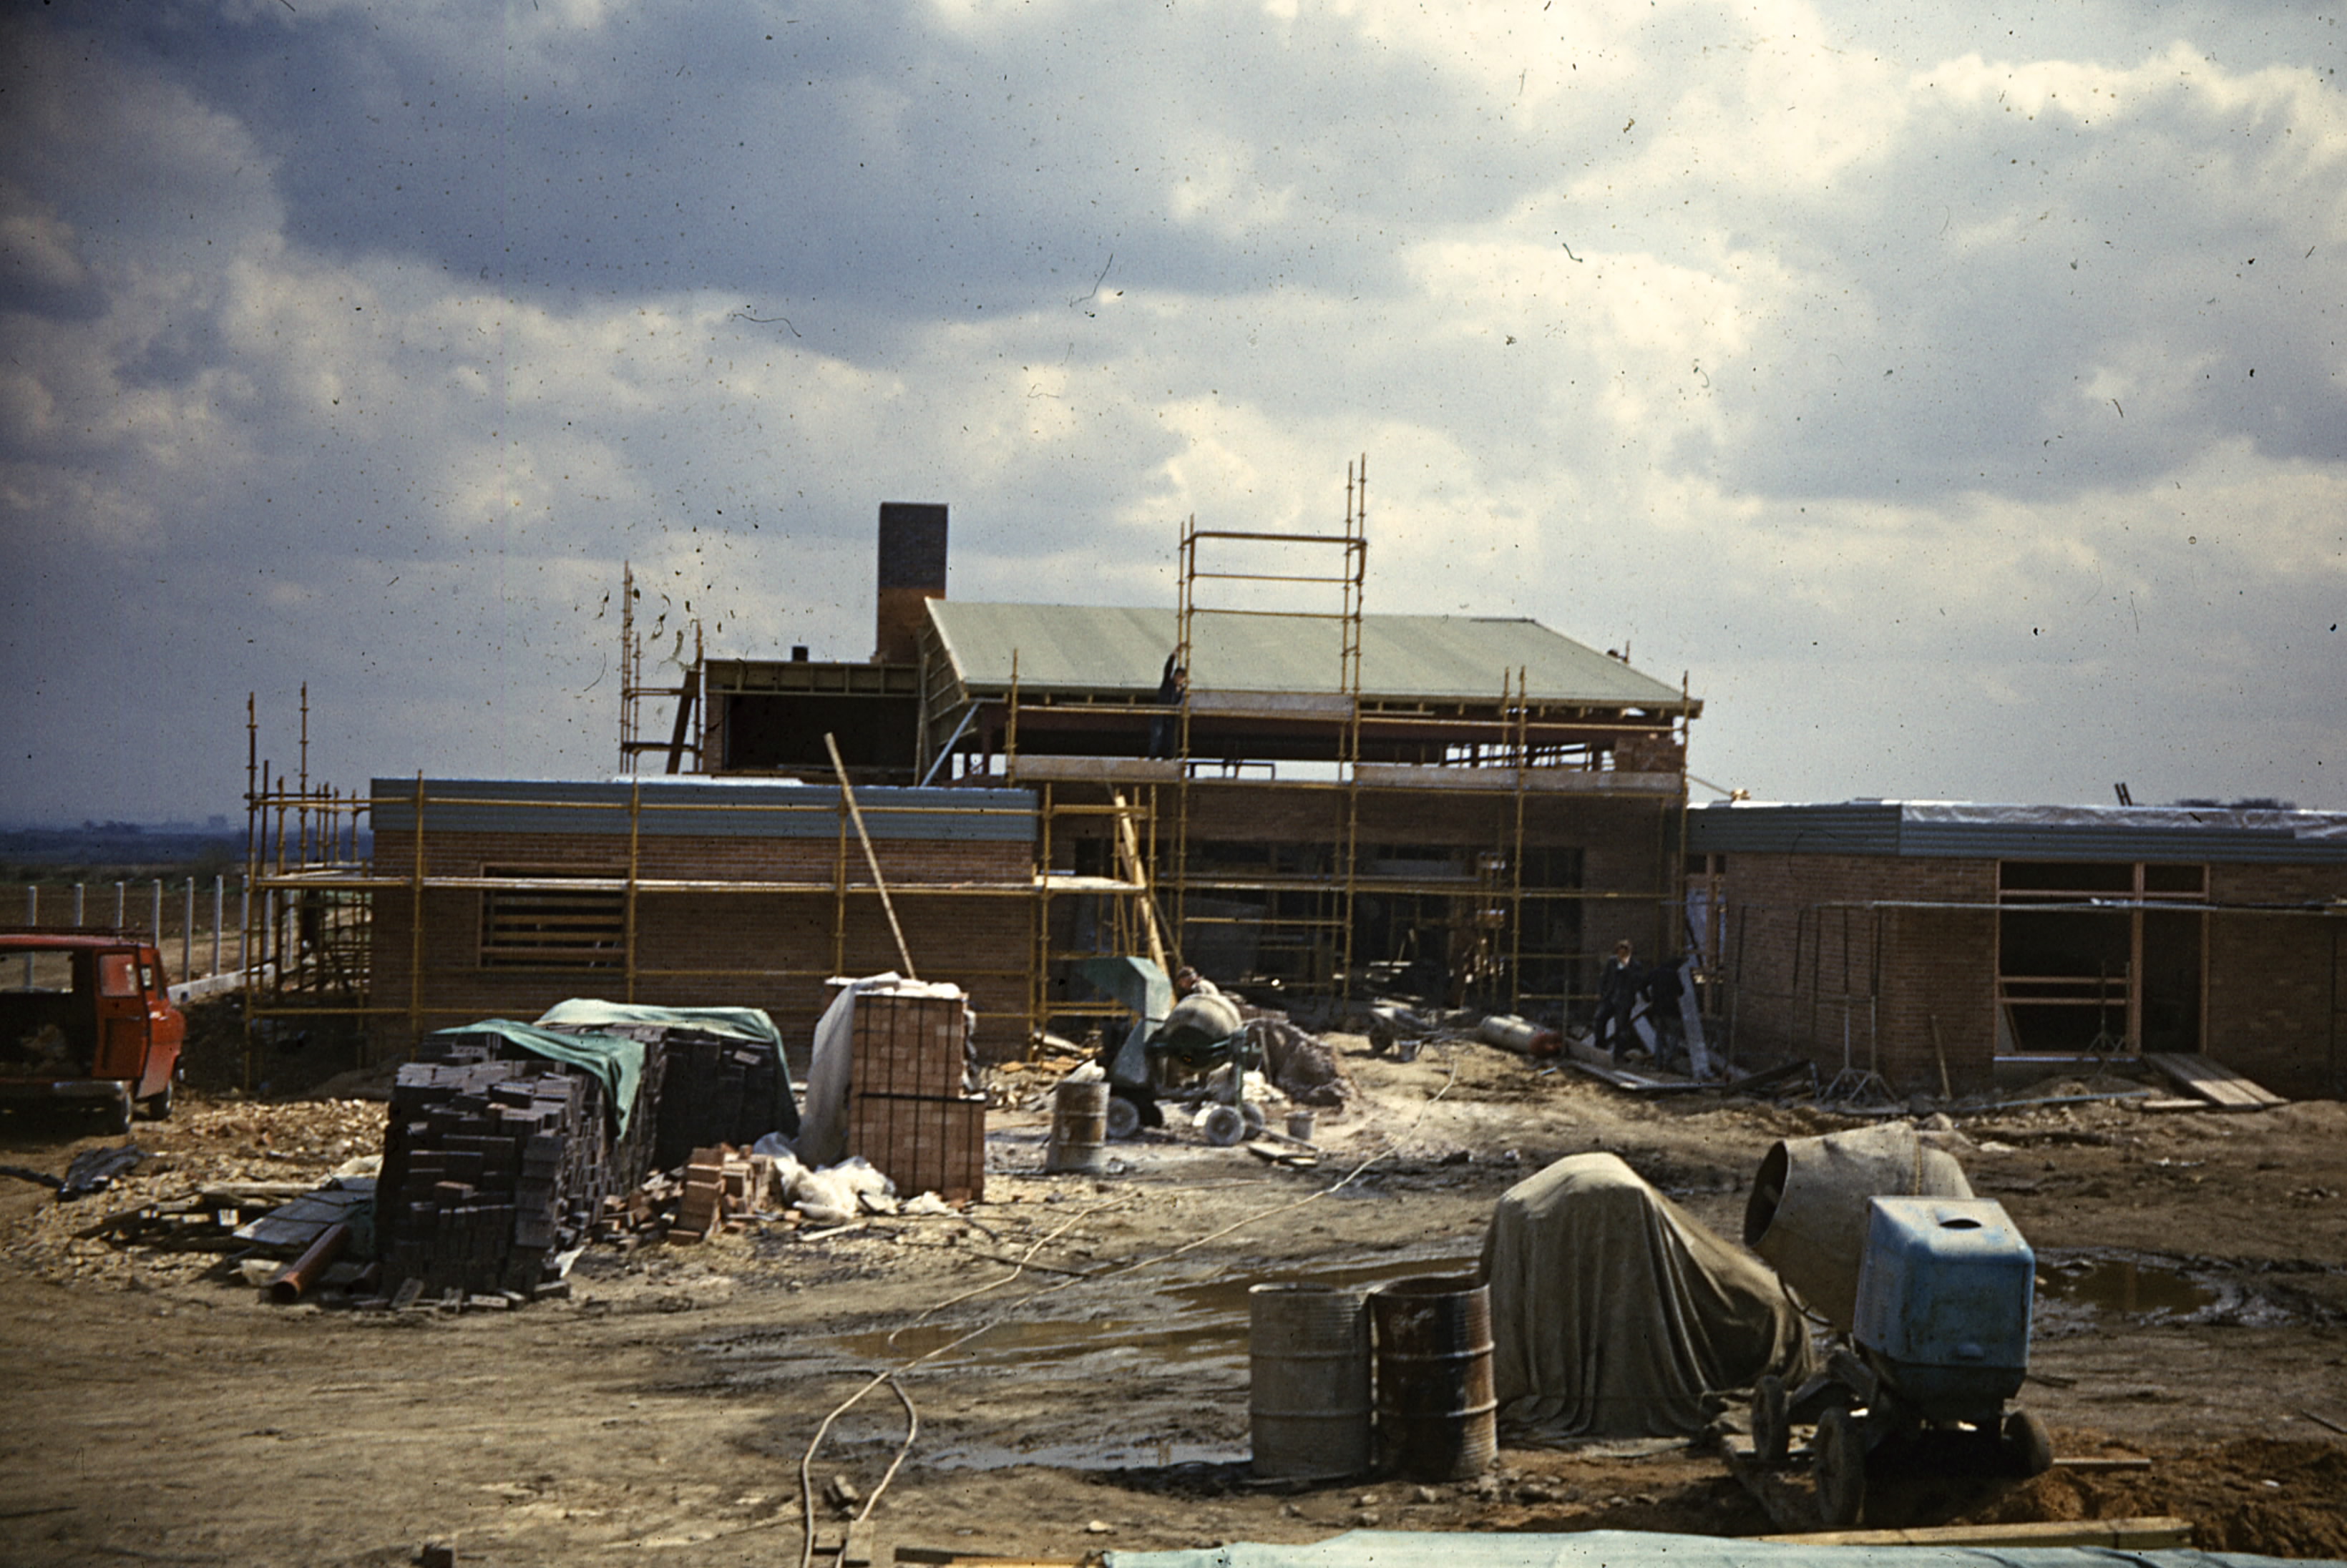 Building 1969